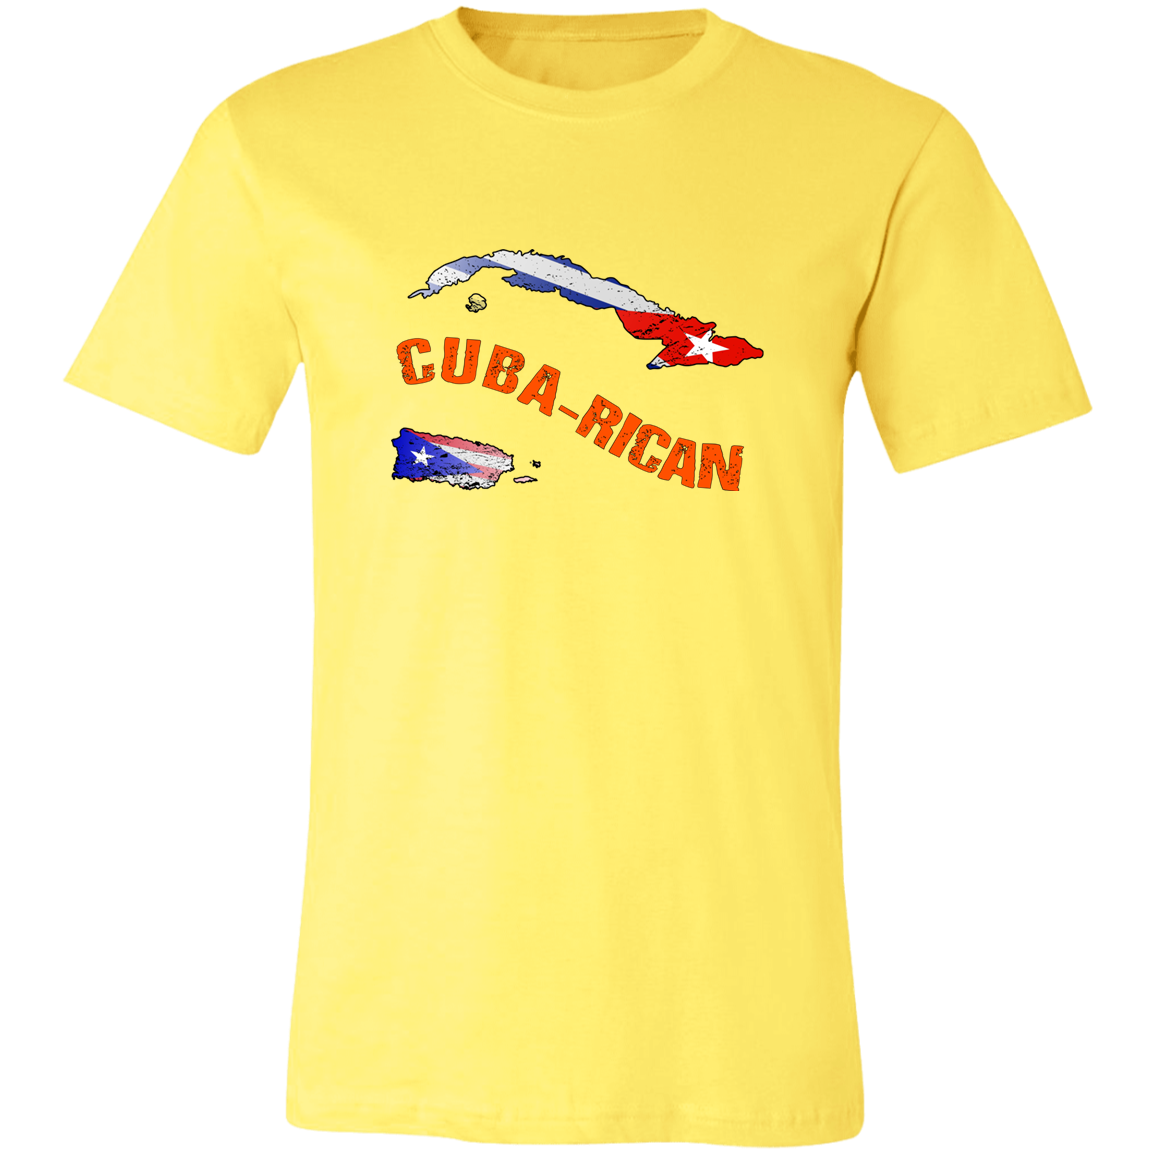 Cuba-Rican Islands Unisex Jersey - Puerto Rican Pride